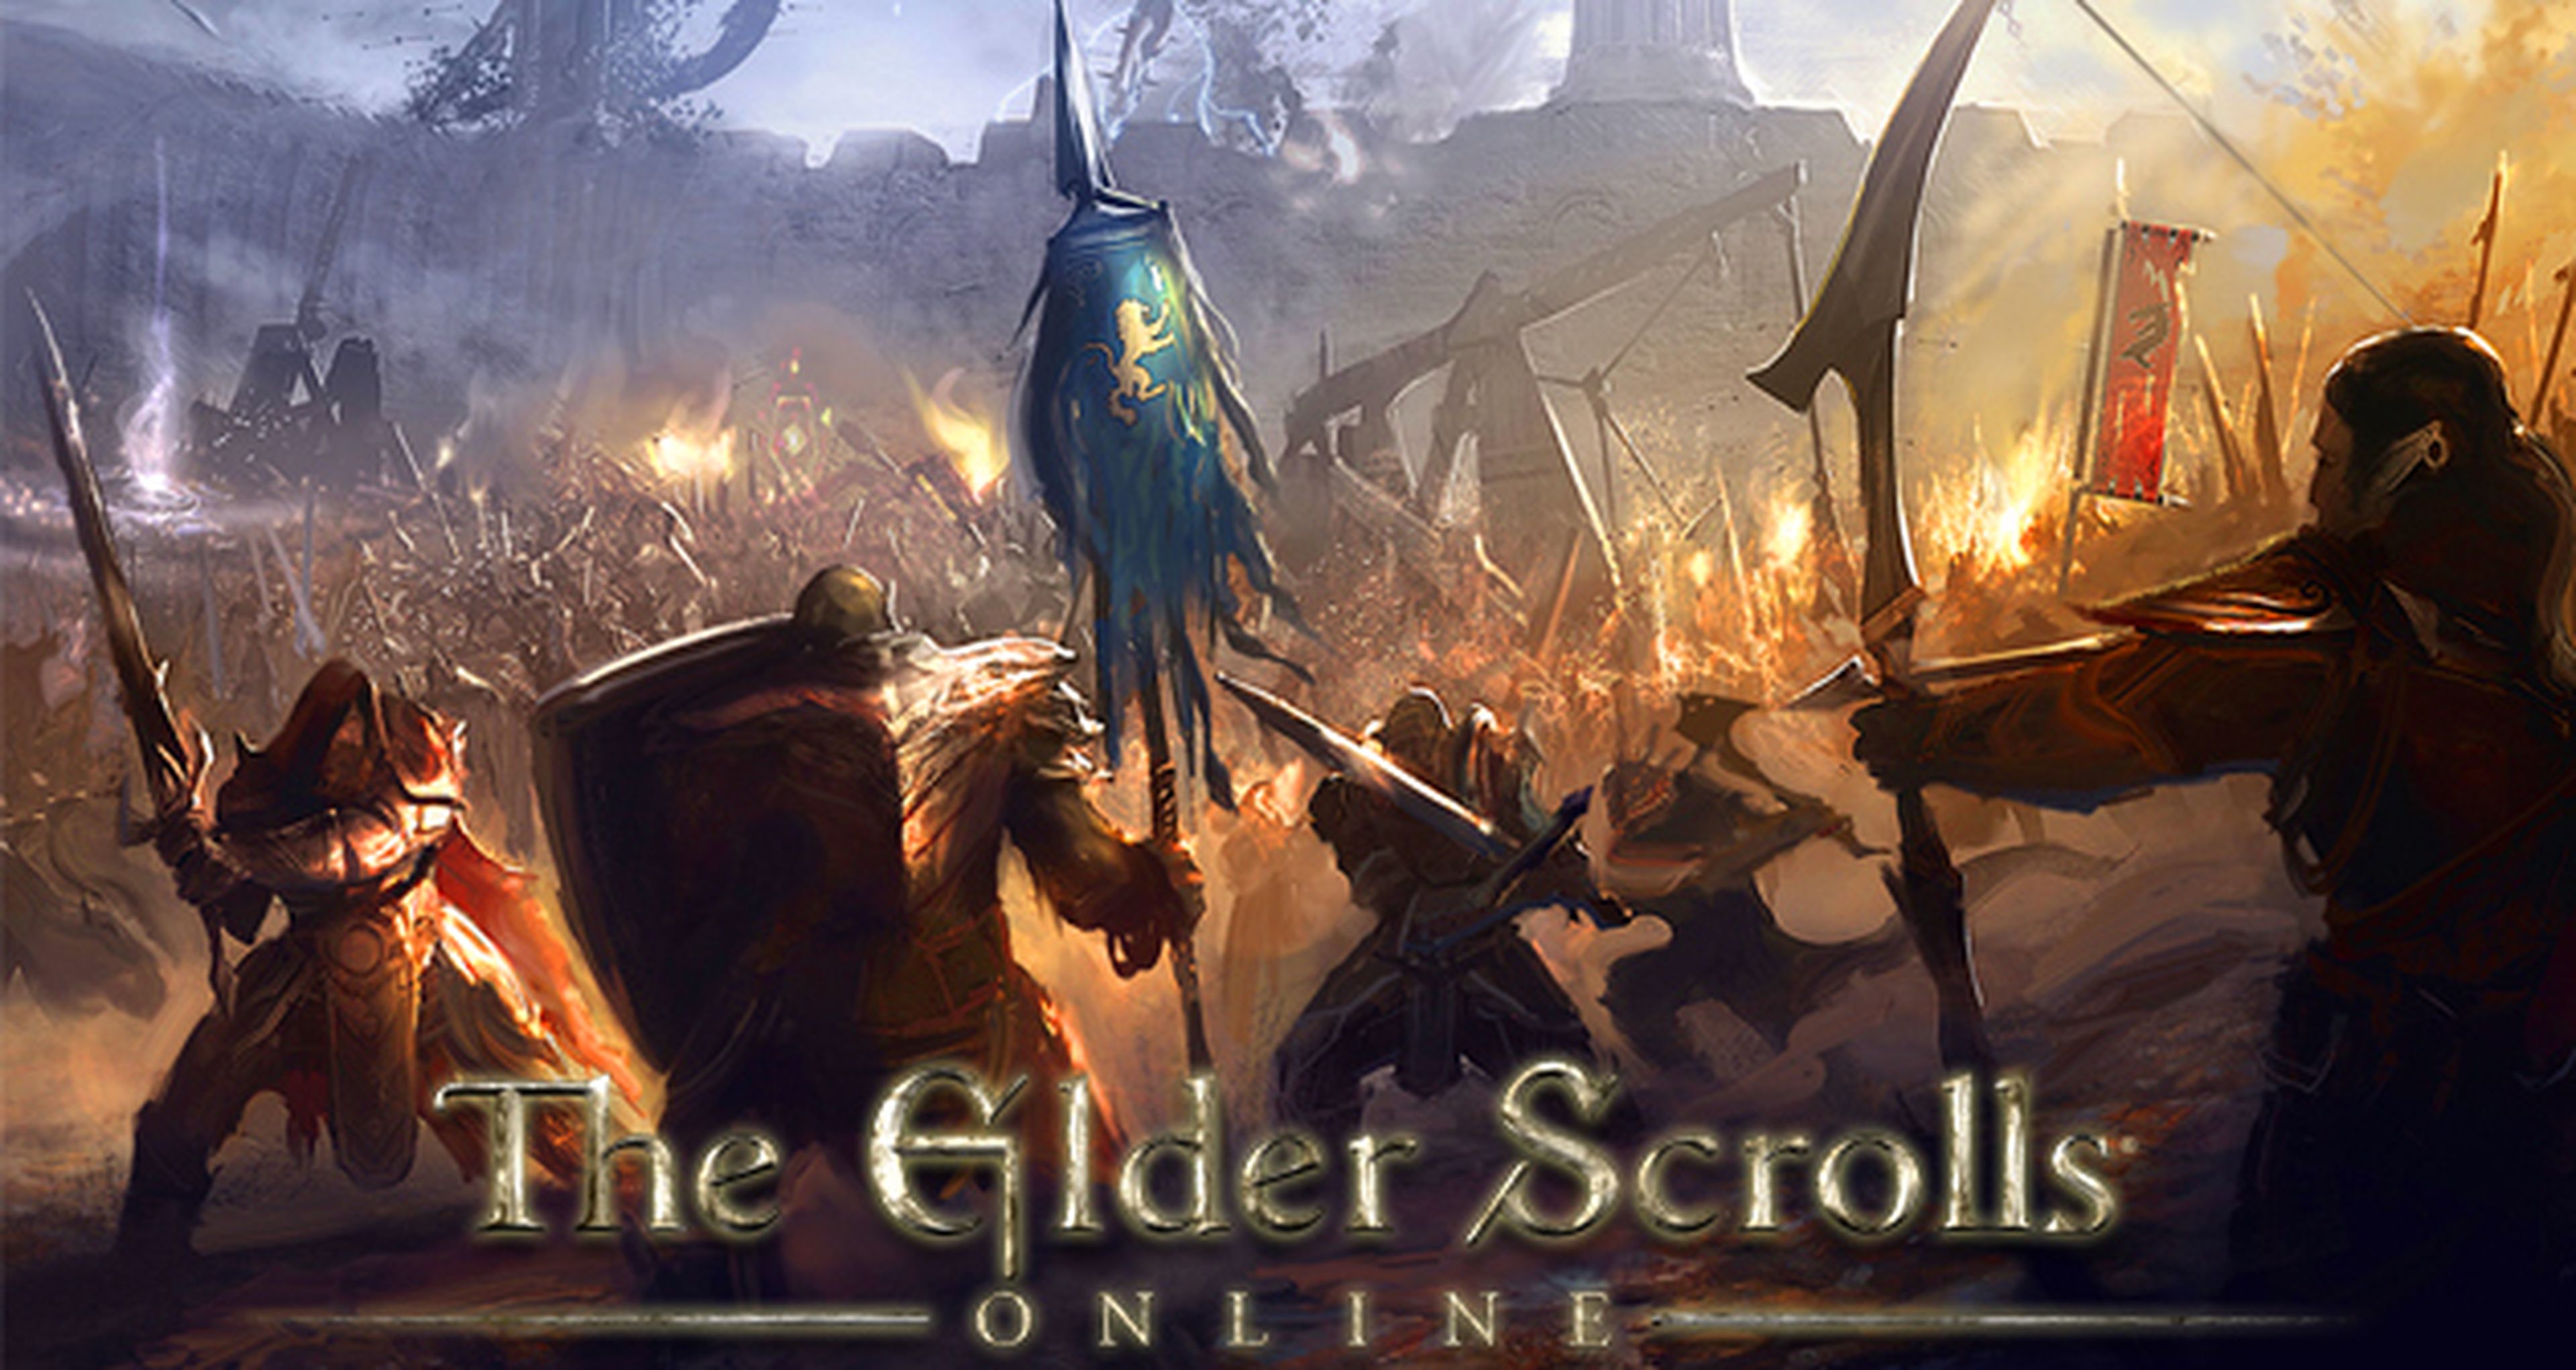 Avance de The Elder Scrolls Online en PC